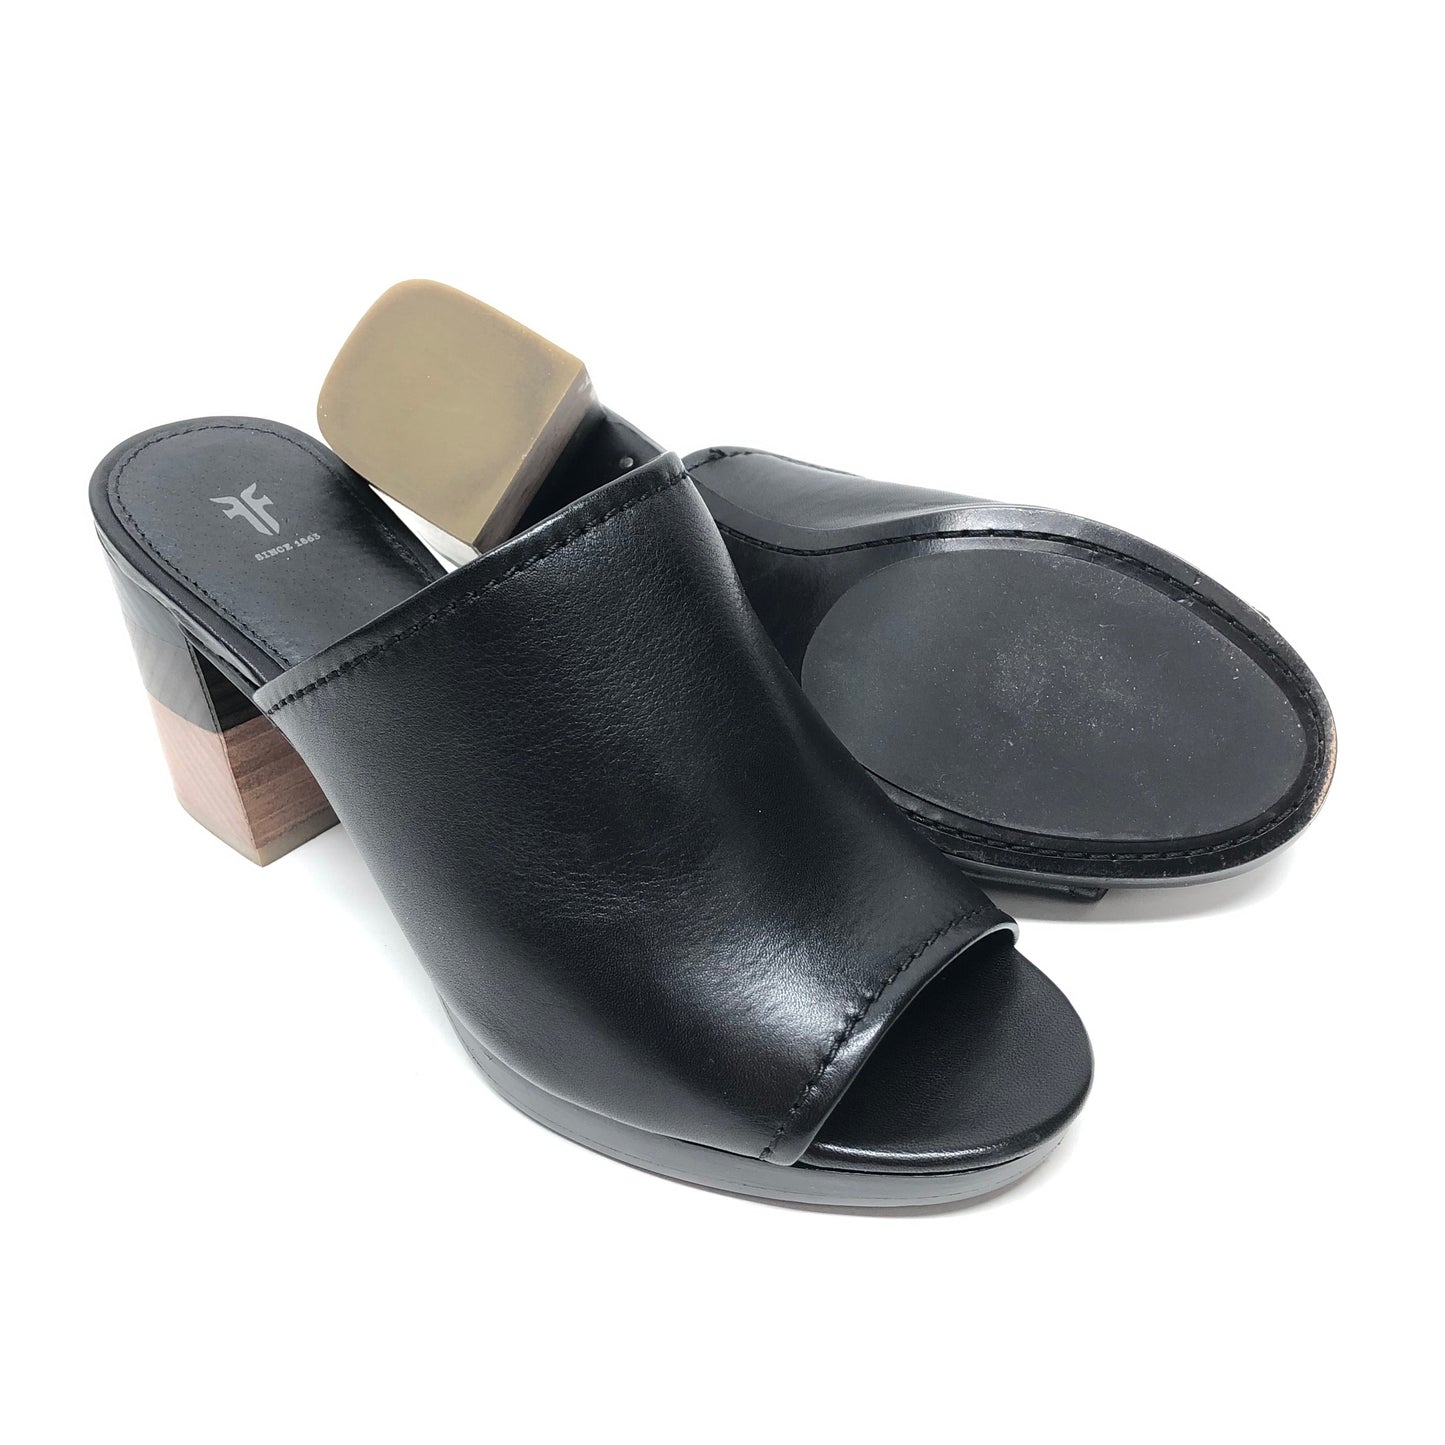 Black Shoes Heels Block Frye, Size 7.5